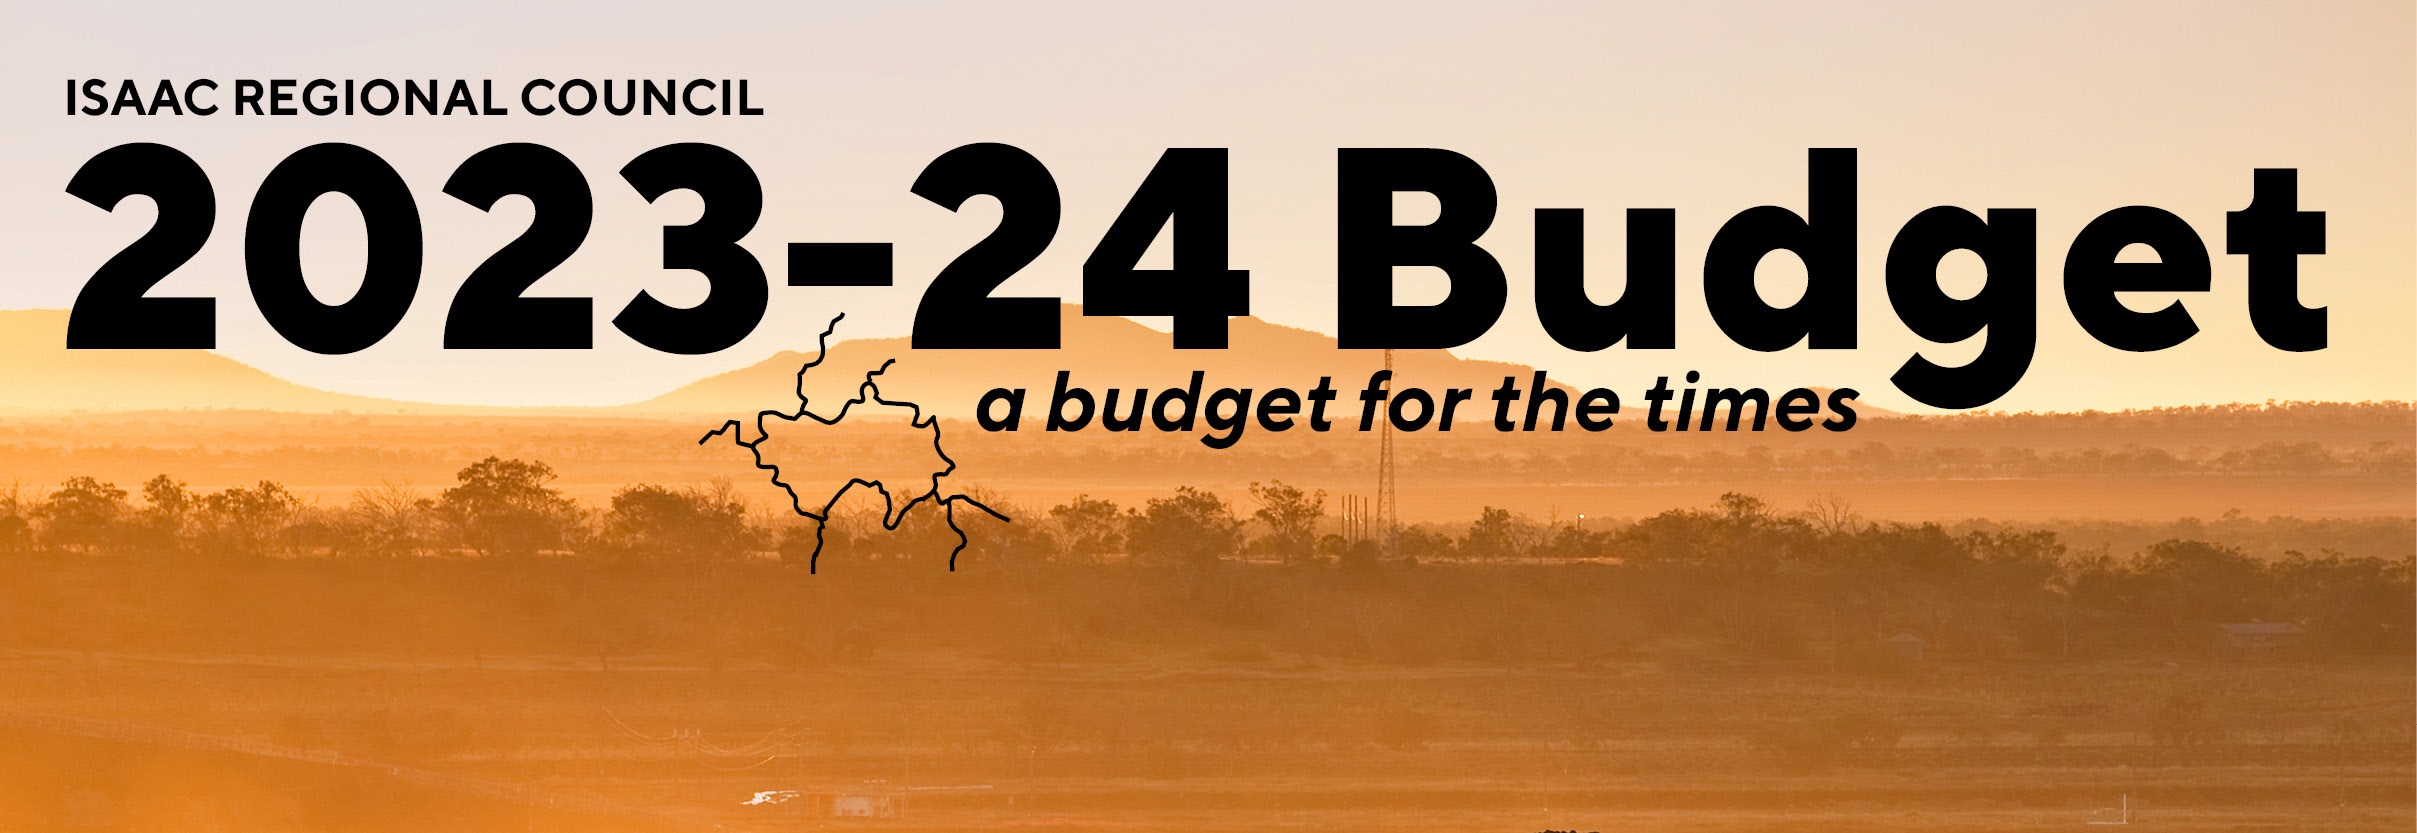 Budget 2023-24_Web Page Banner.jpg